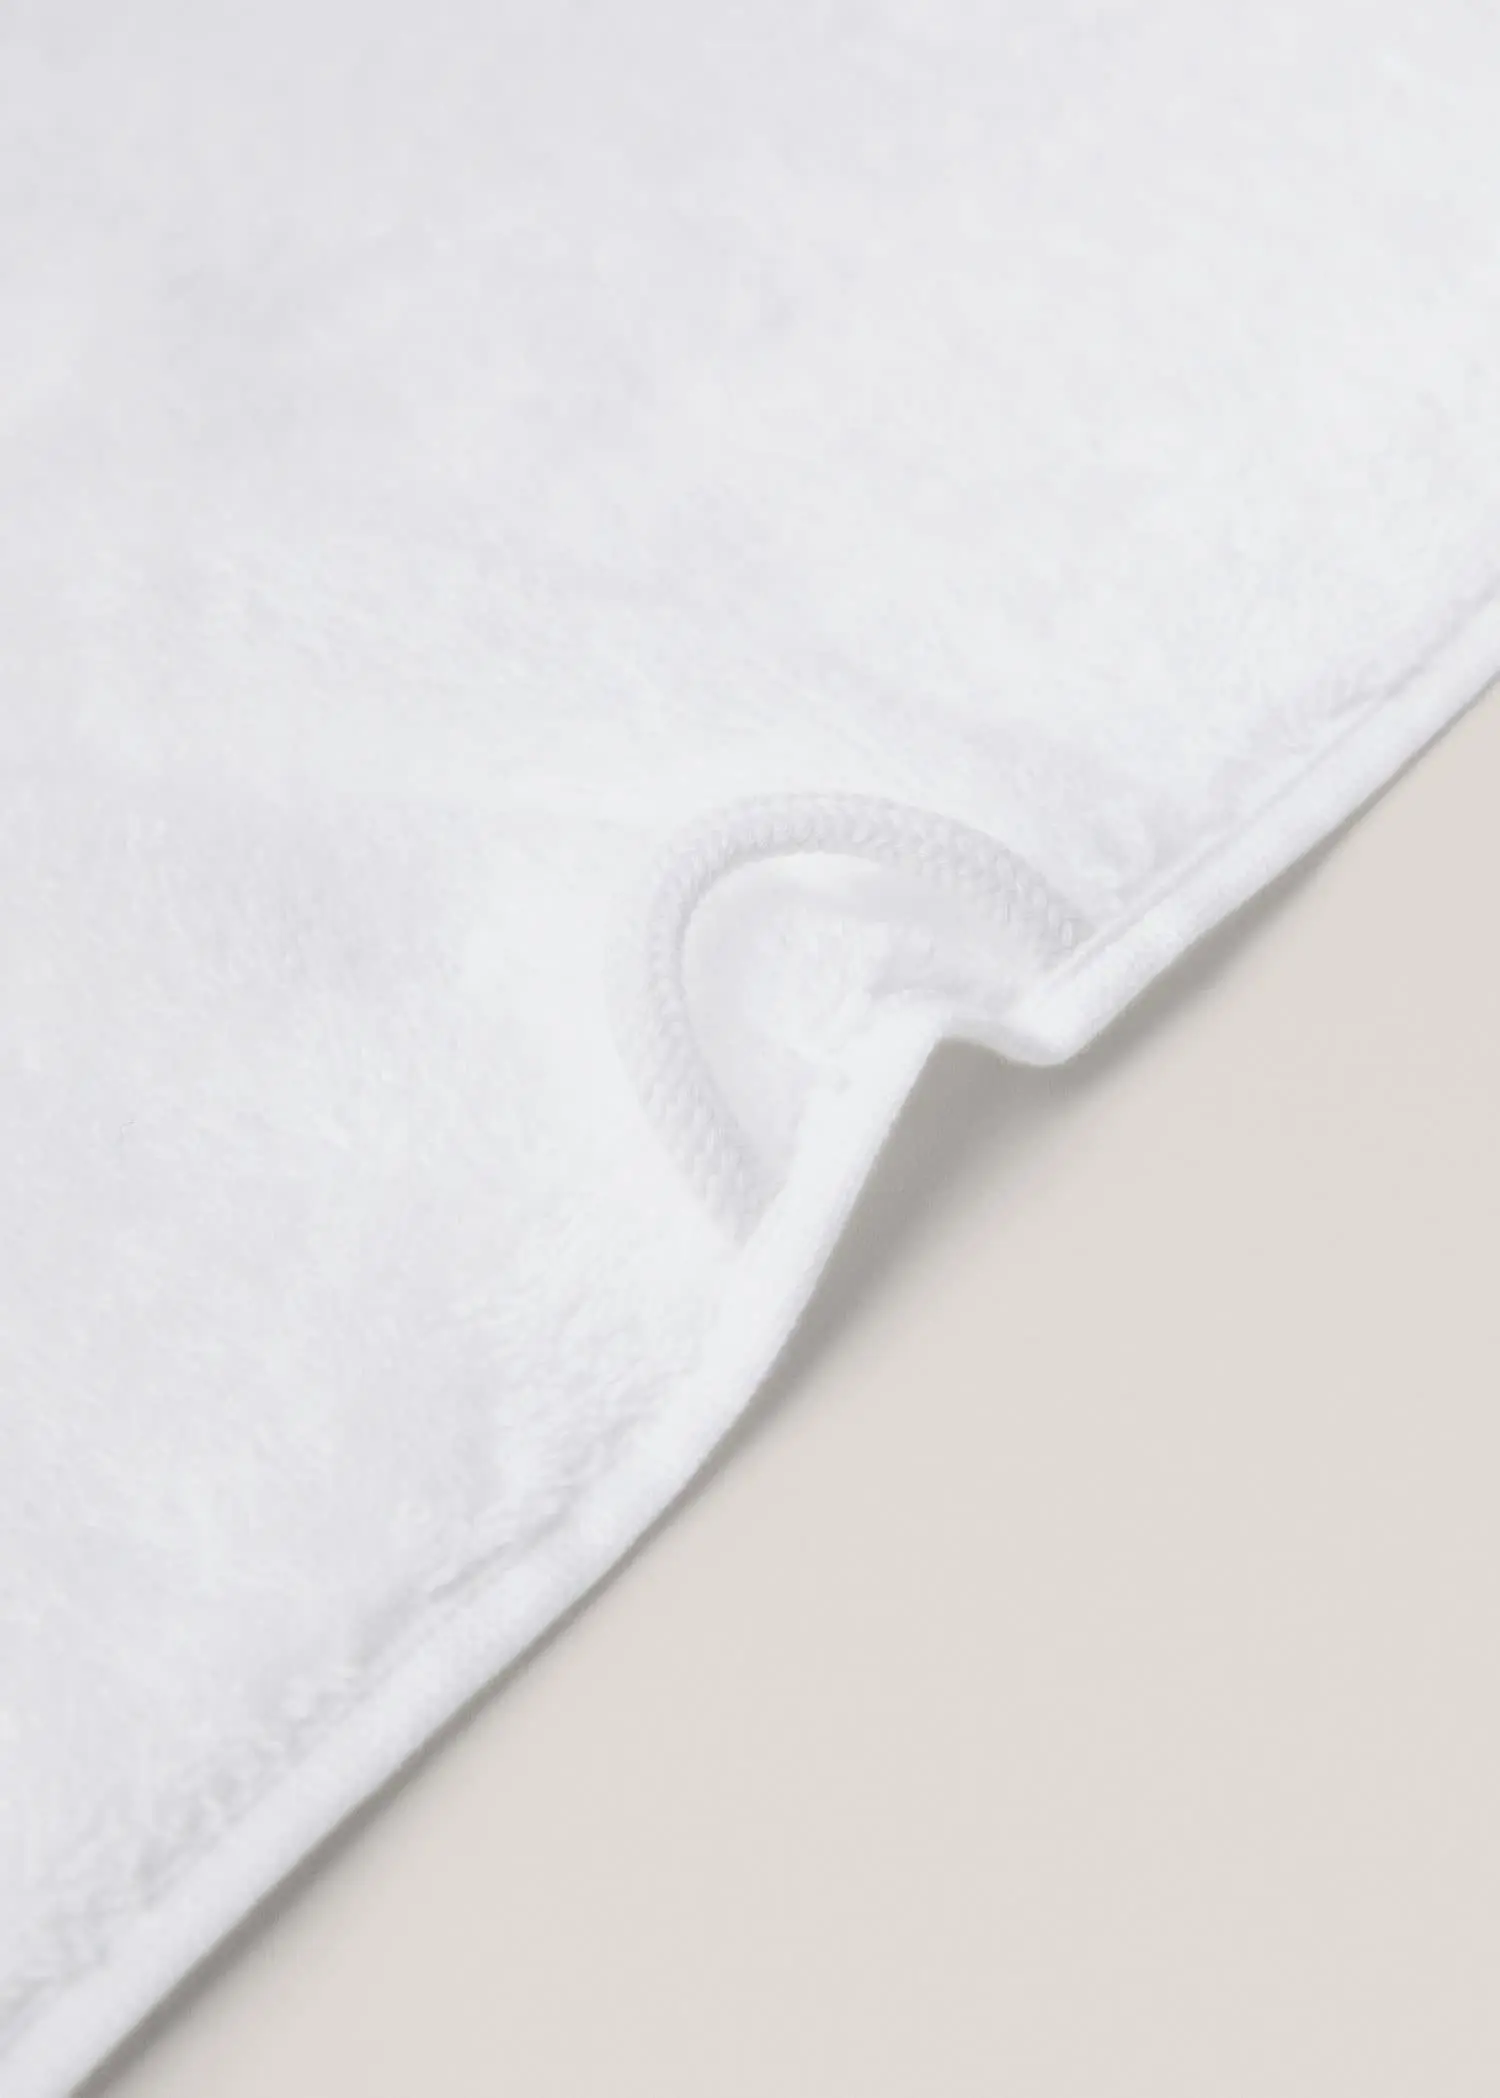 Mango Cotton 500gr/m2 hand towel 20x35 in . 3